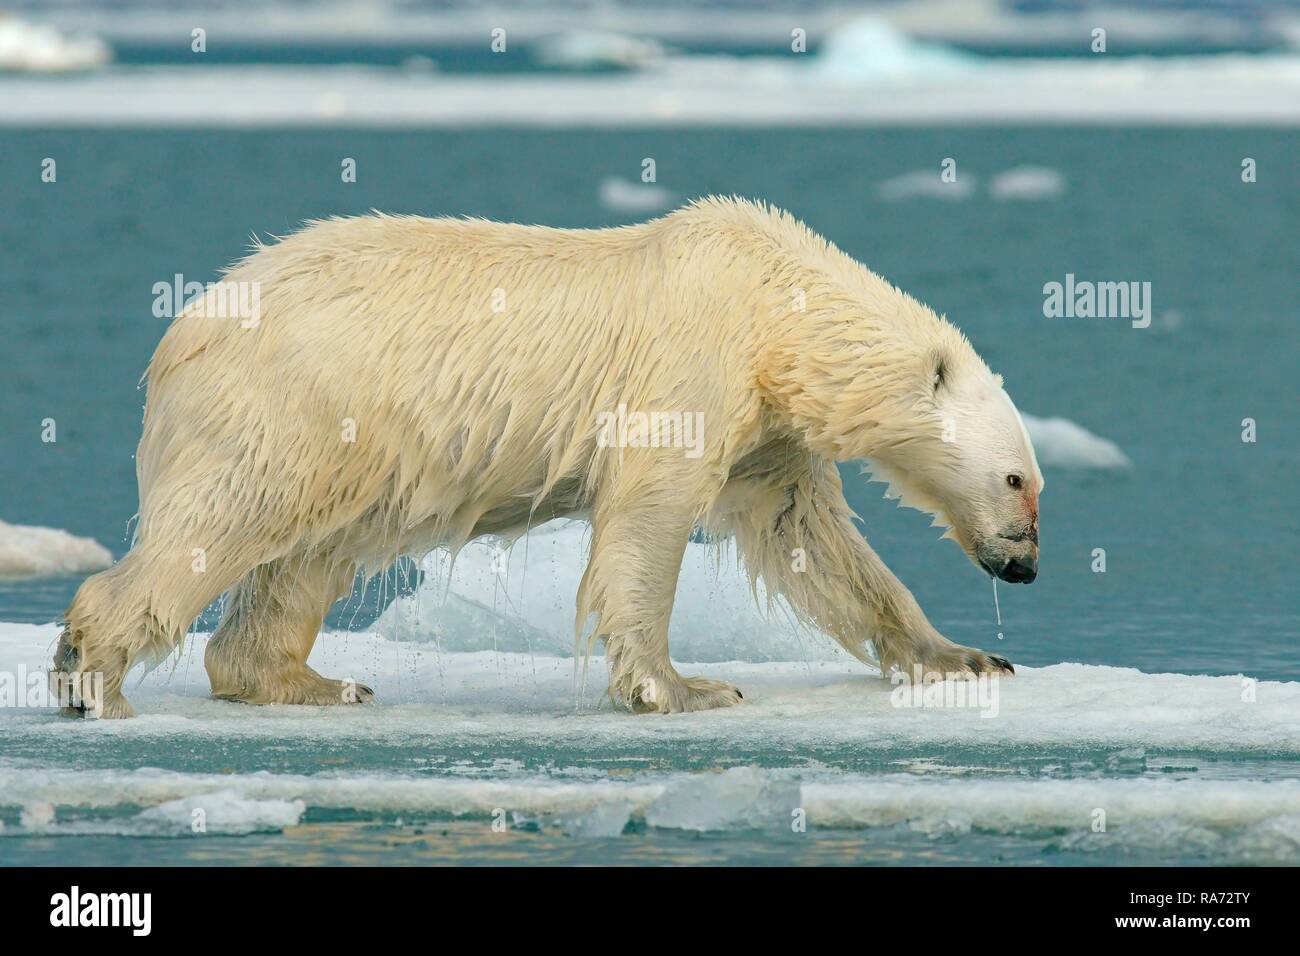 Polar bear (Ursus maritimus) runs on ice floe, water drips from wet fur, Svalbard, Norwegian Arctic, Norway Stock Photo